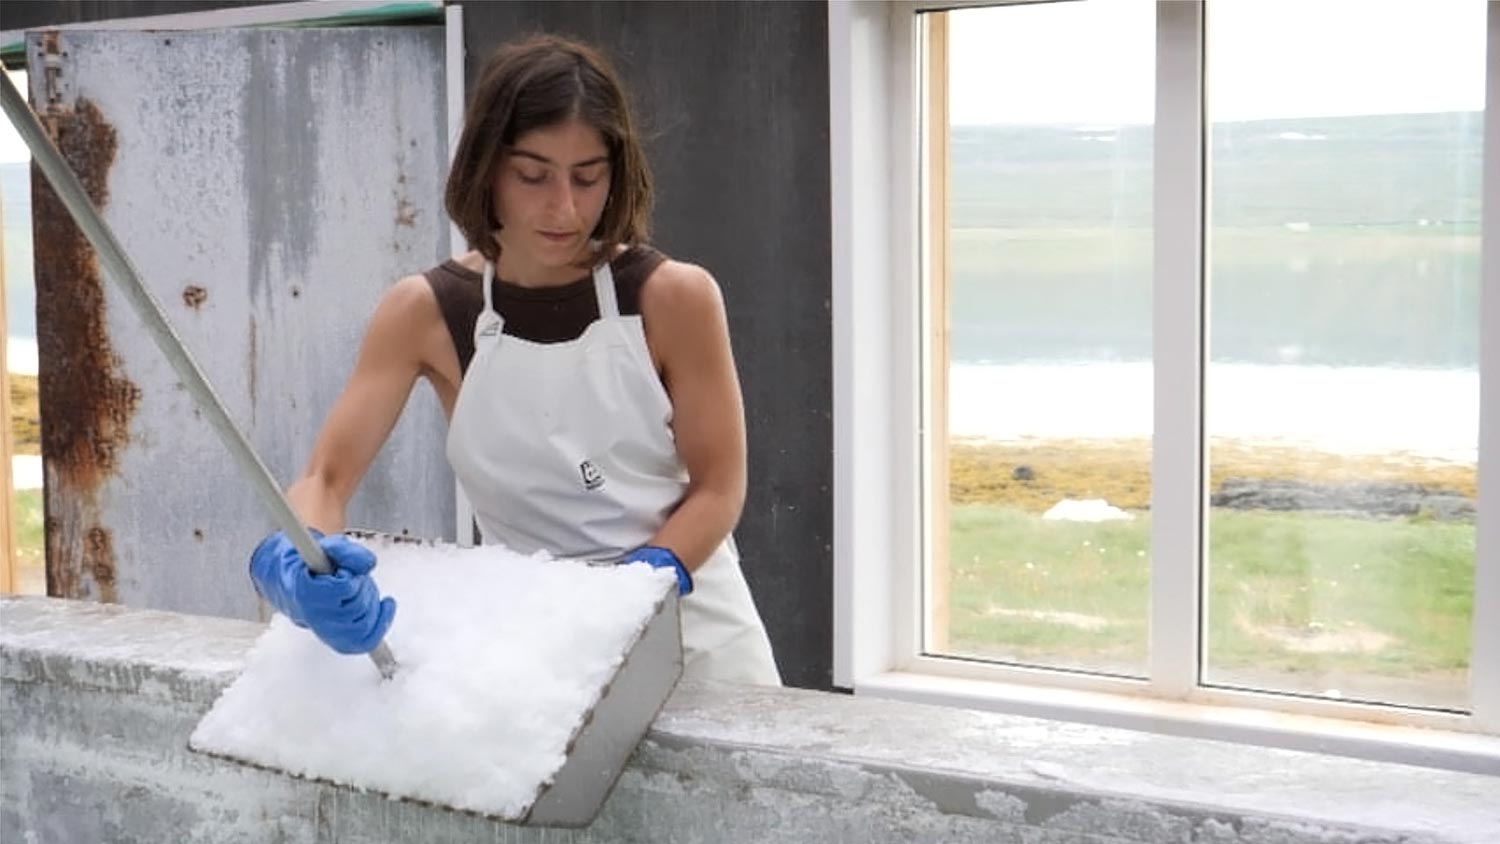 Young woman harvesting salt.